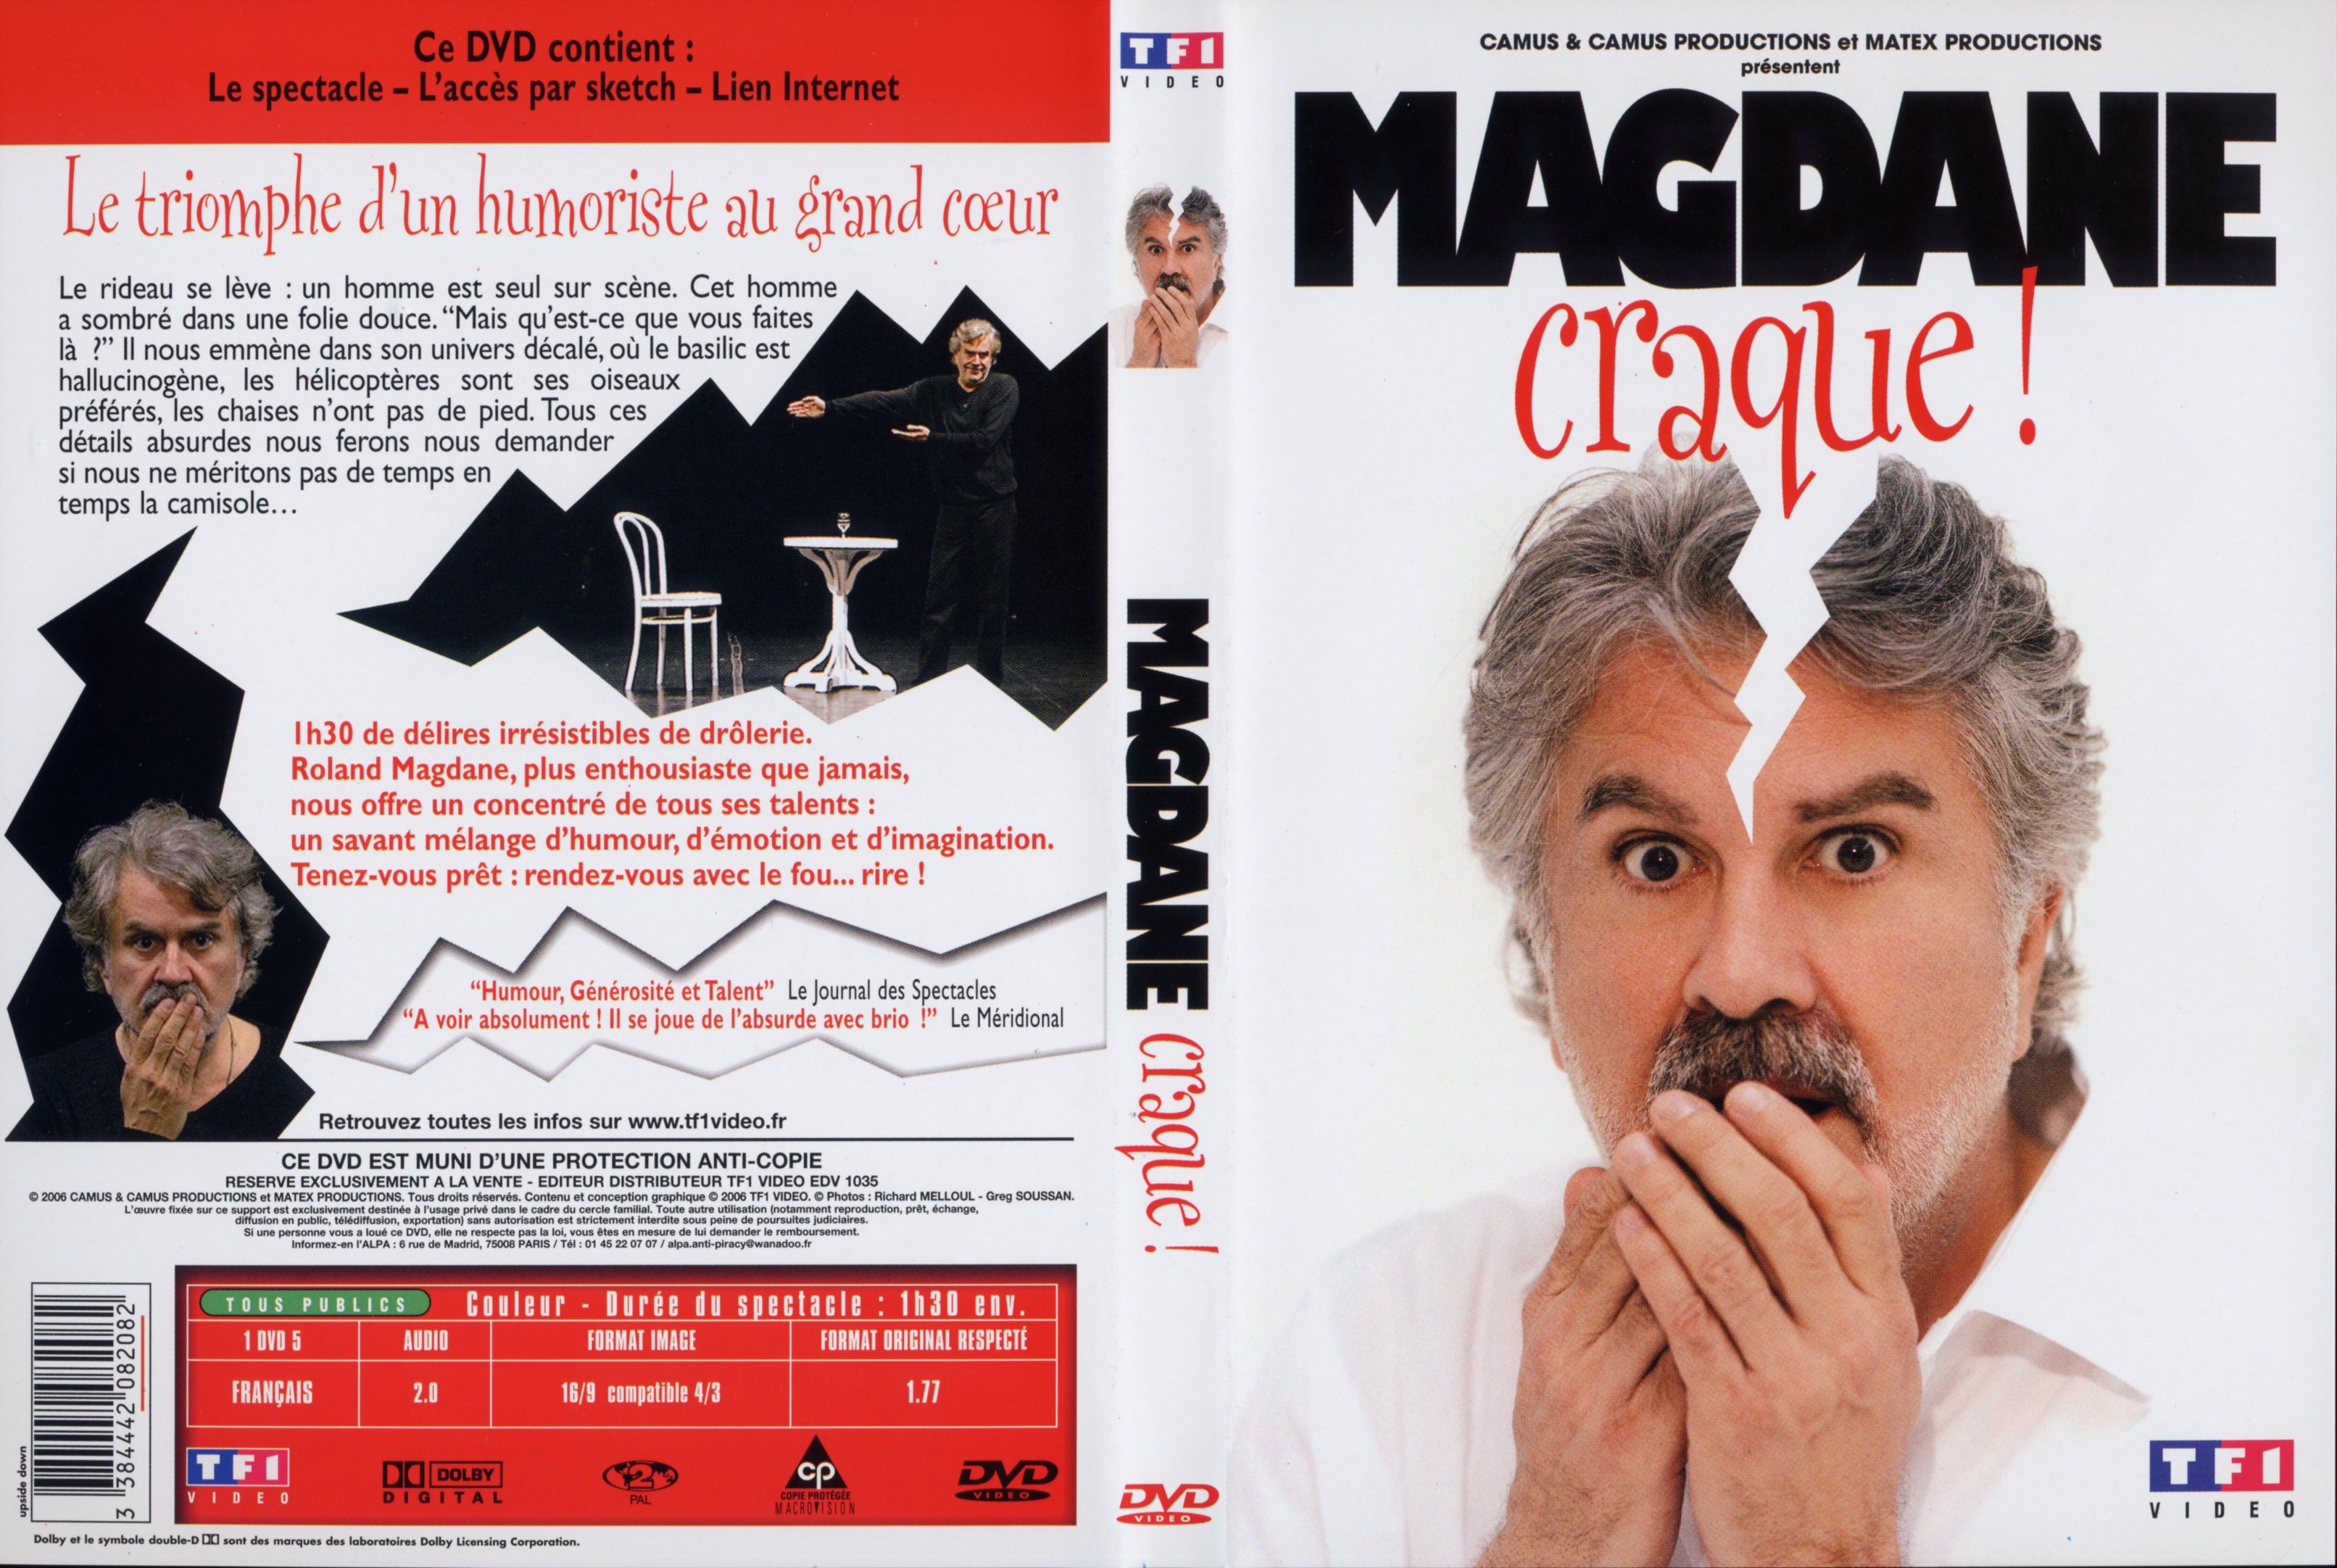 Jaquette DVD Magdane craque